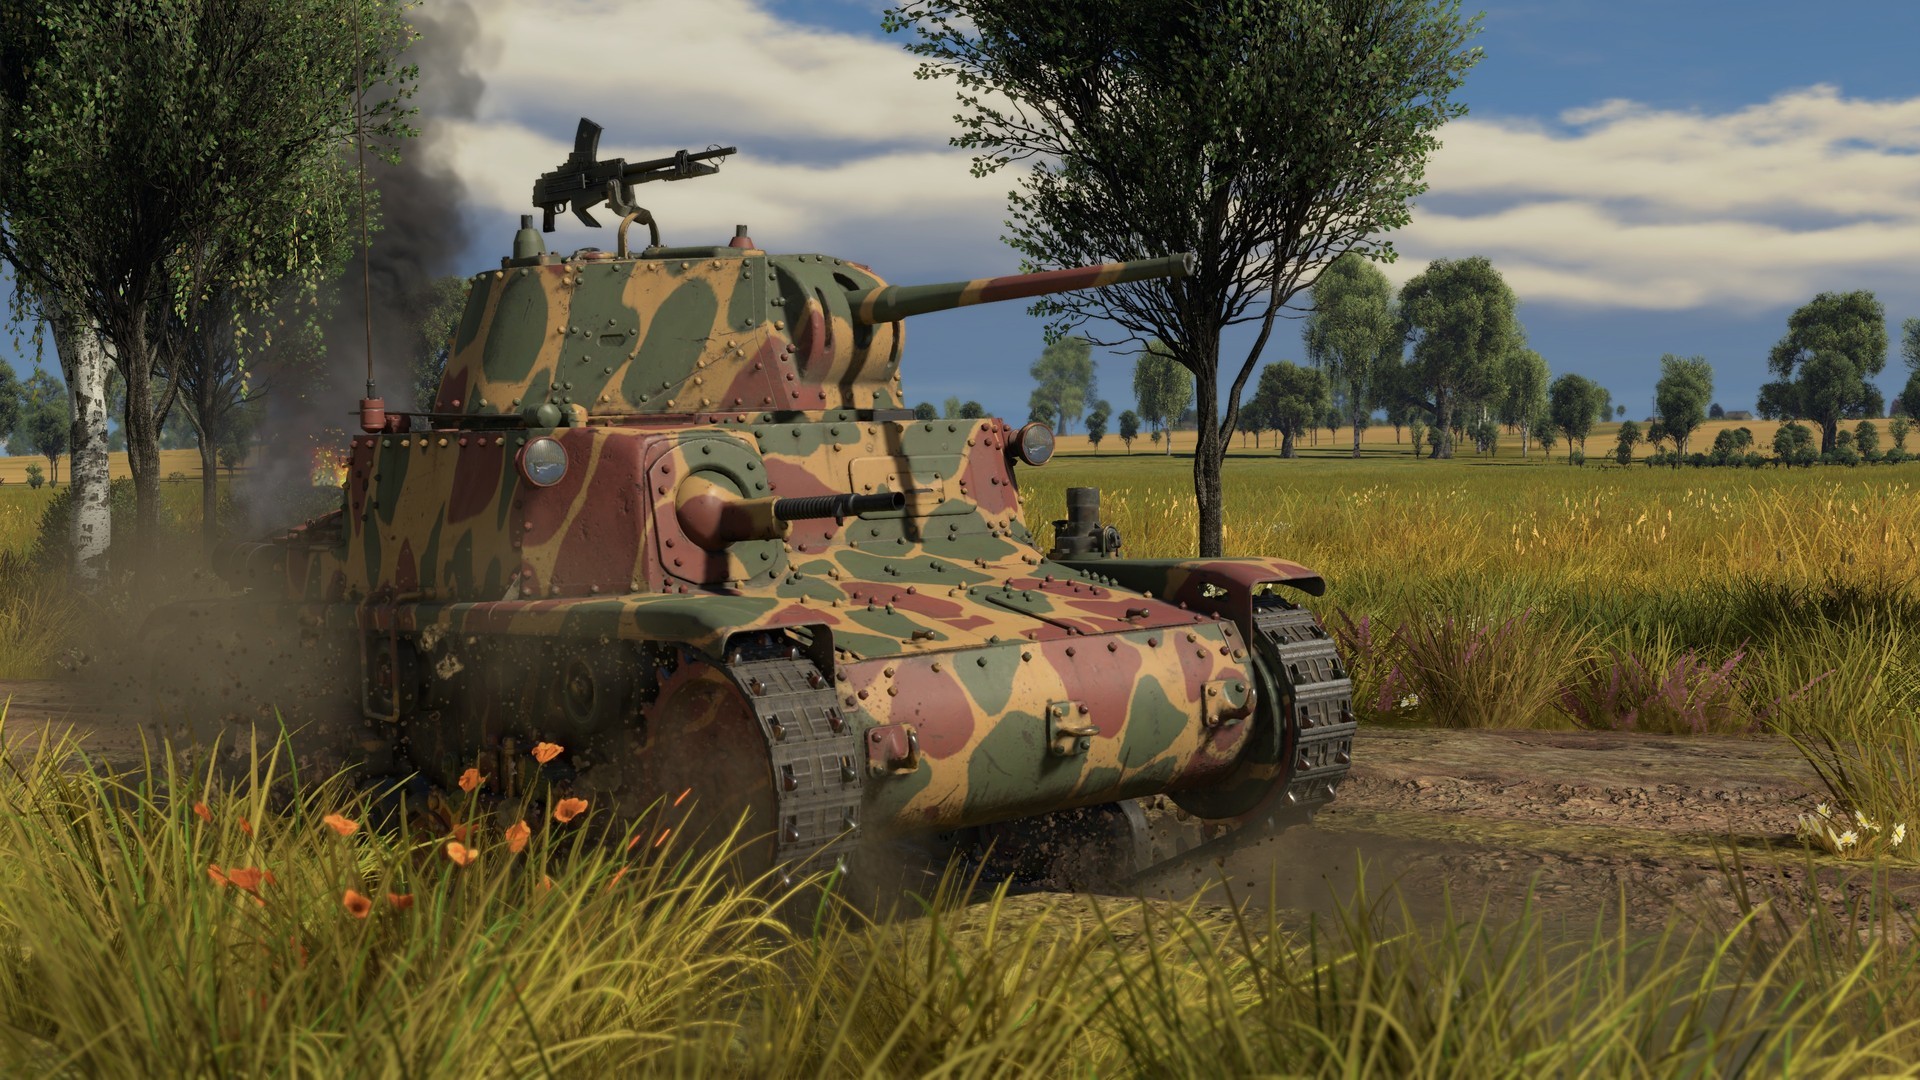 Скриншот War Thunder - Italian Starter Pack 💎 DLC STEAM GIFT RU